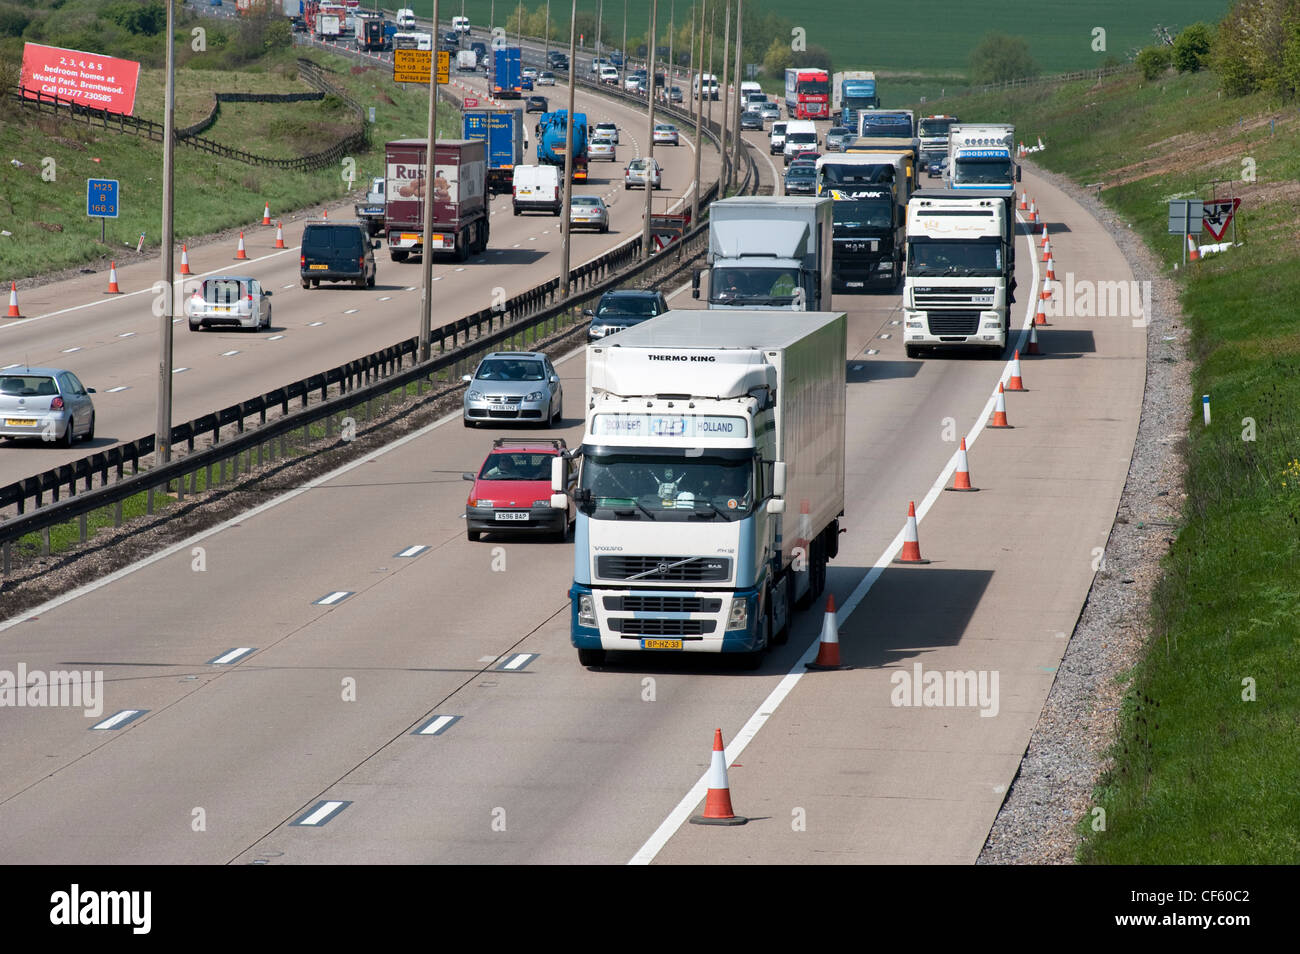 A constant stream of traffic passing through Essex on the M25 London Orbital Motorway. Stock Photo